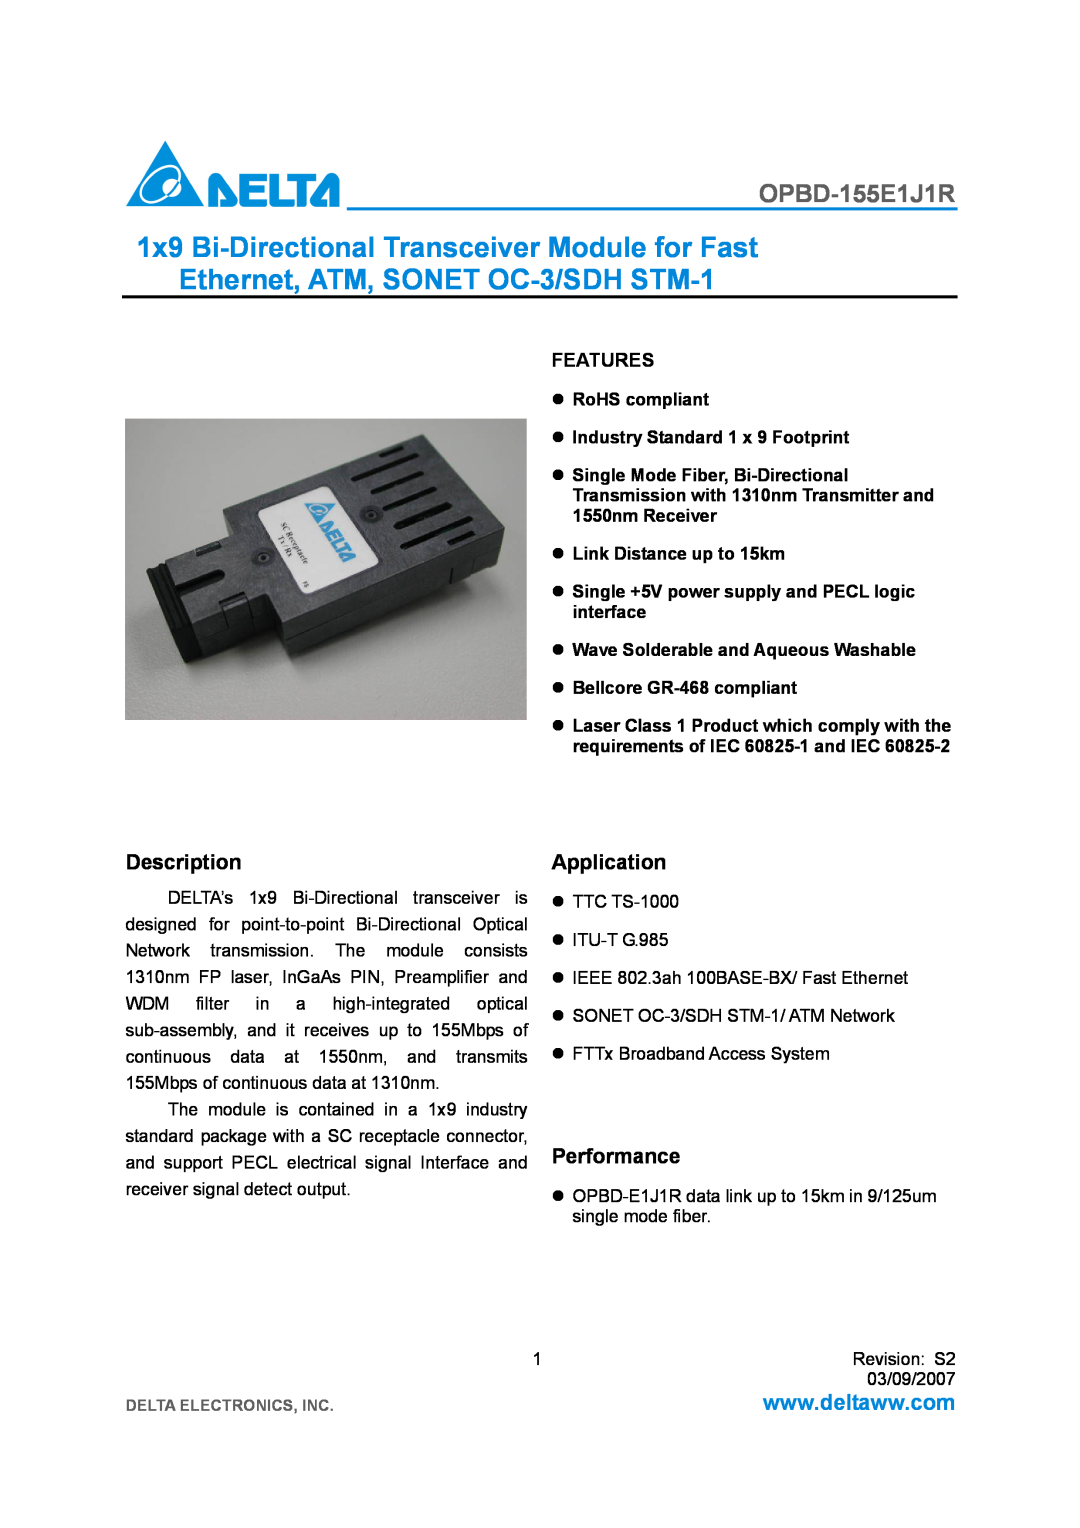 Delta Electronics OPBD-155E1J1R manual Description, Application, Performance, Link Distance up to 15km, Features 